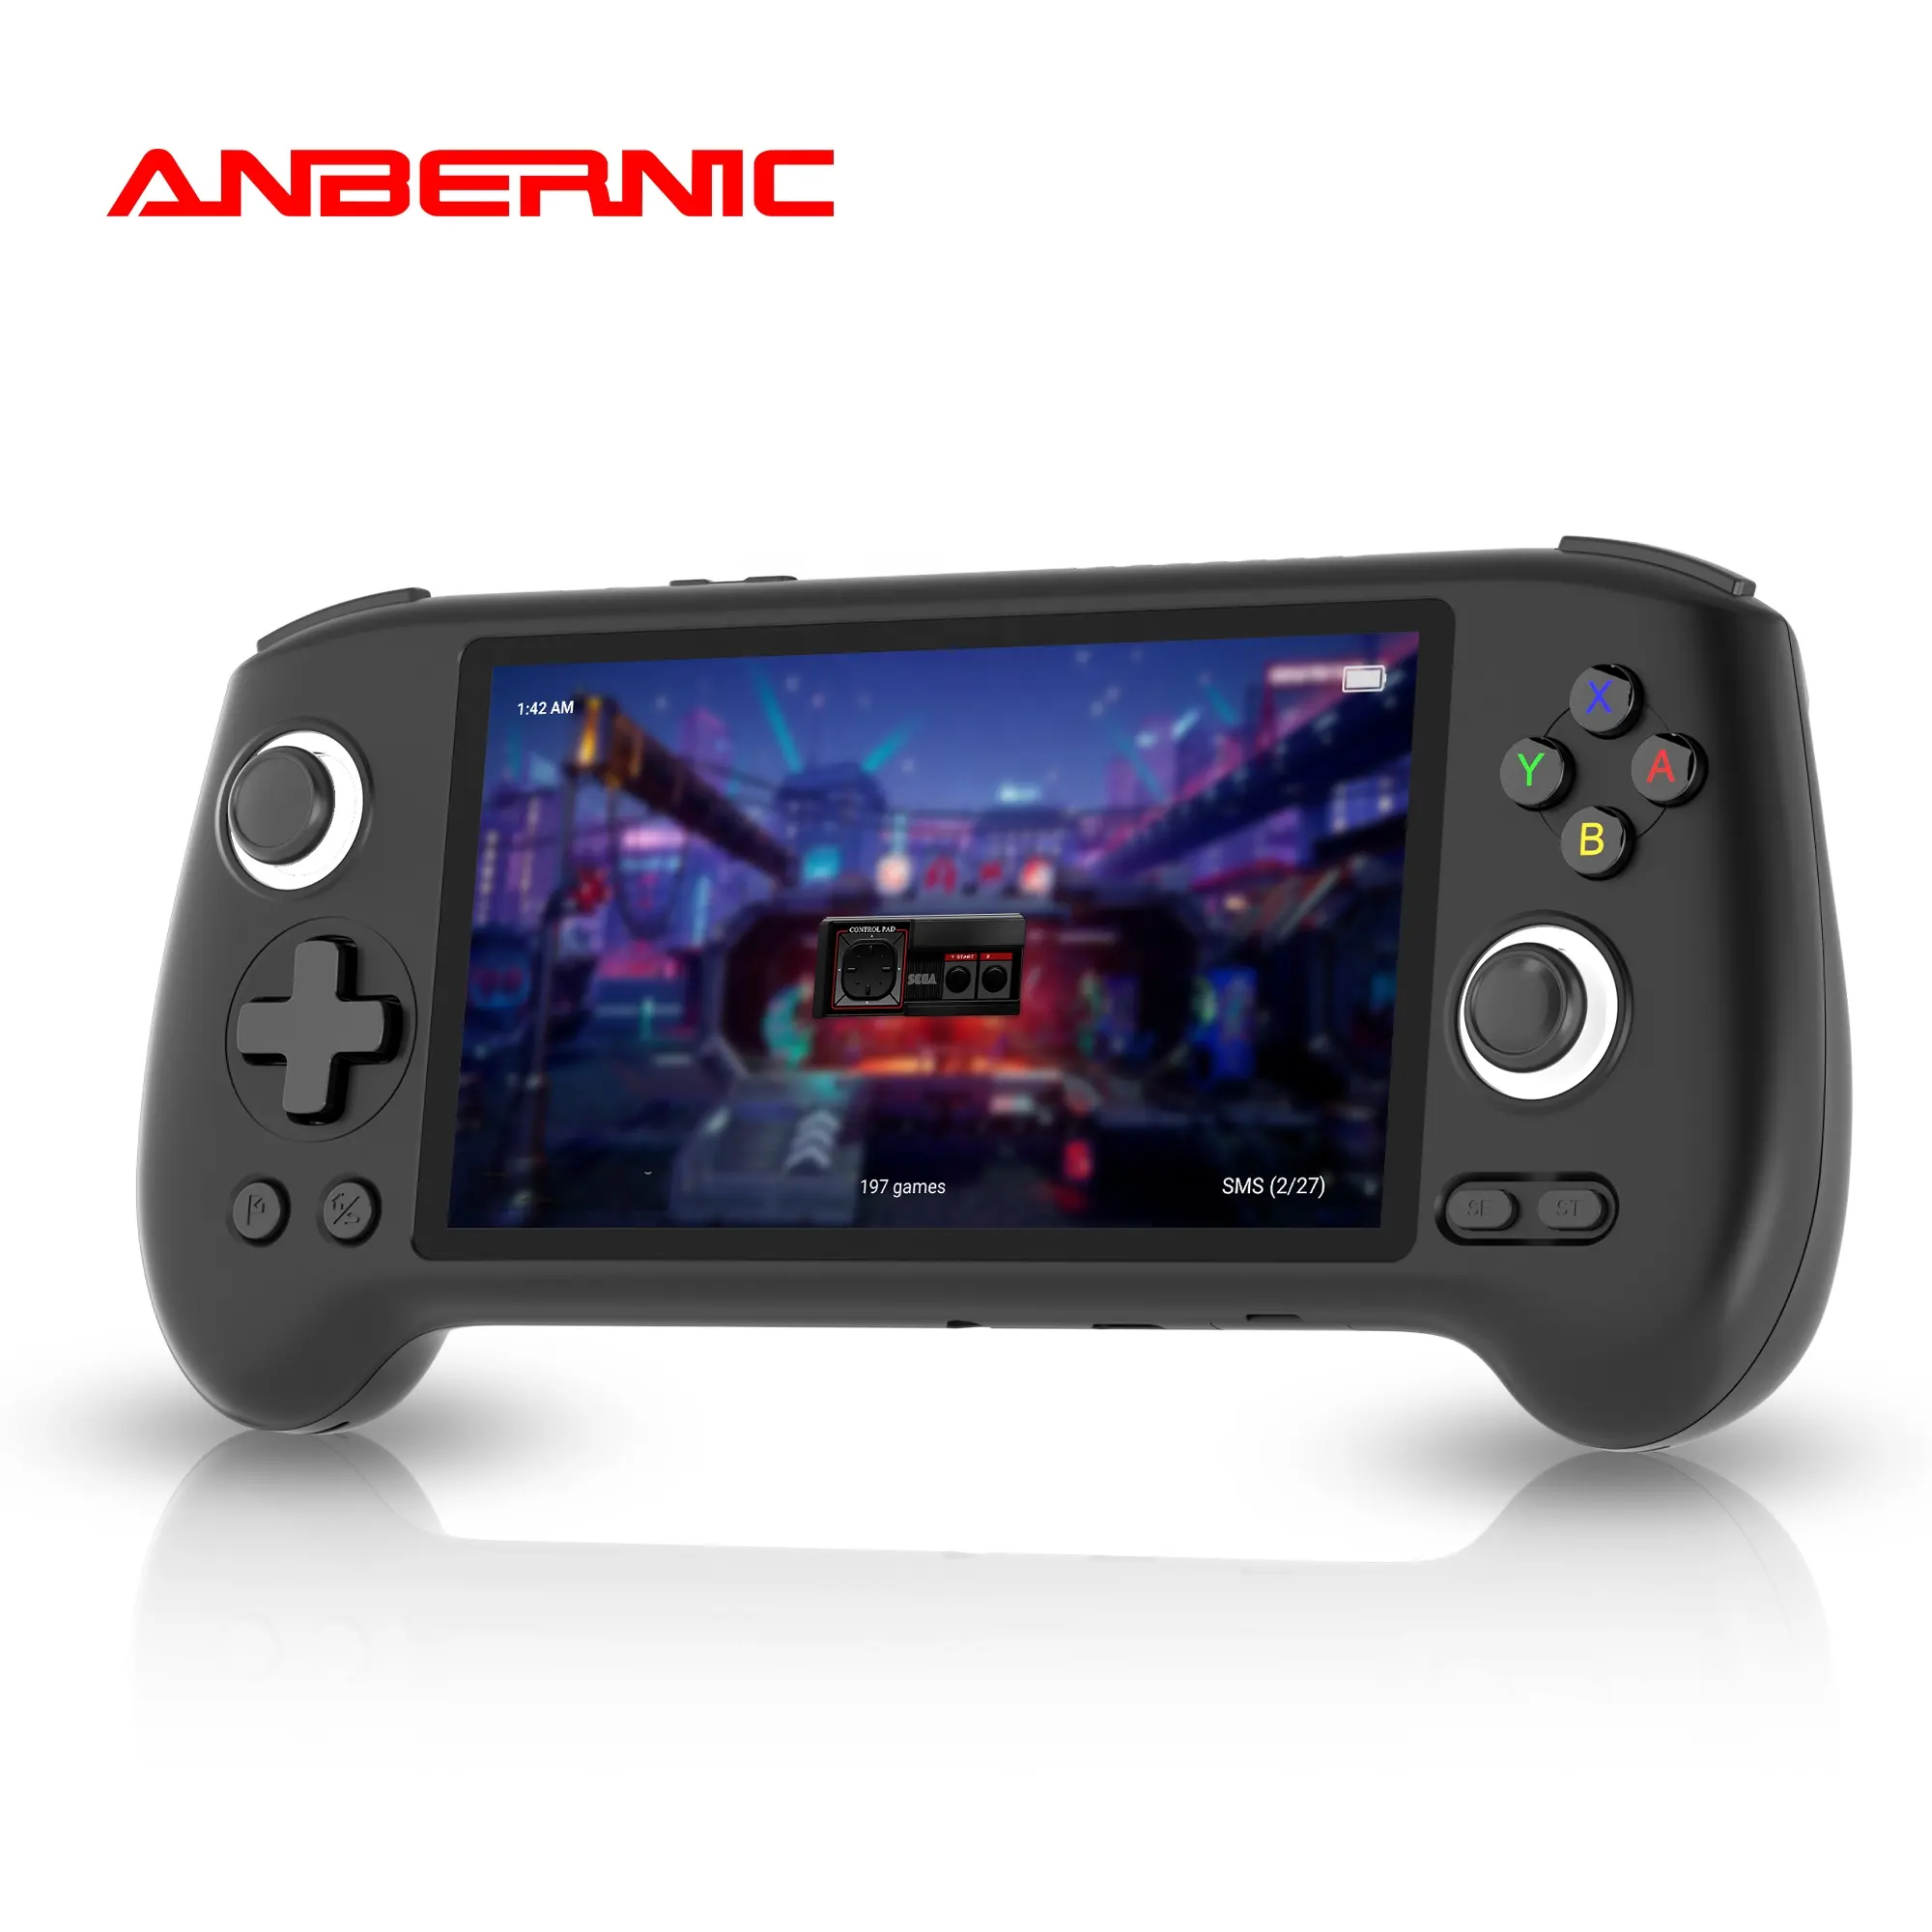 ANBERNIC 새로운 휴대용 게임 콘솔 RG556 안드로이드 13 시스템 레트로 게임 콘솔 Oled 게임 플레이어 5.5 "스크린 플레이 PS2 PSP 3DS